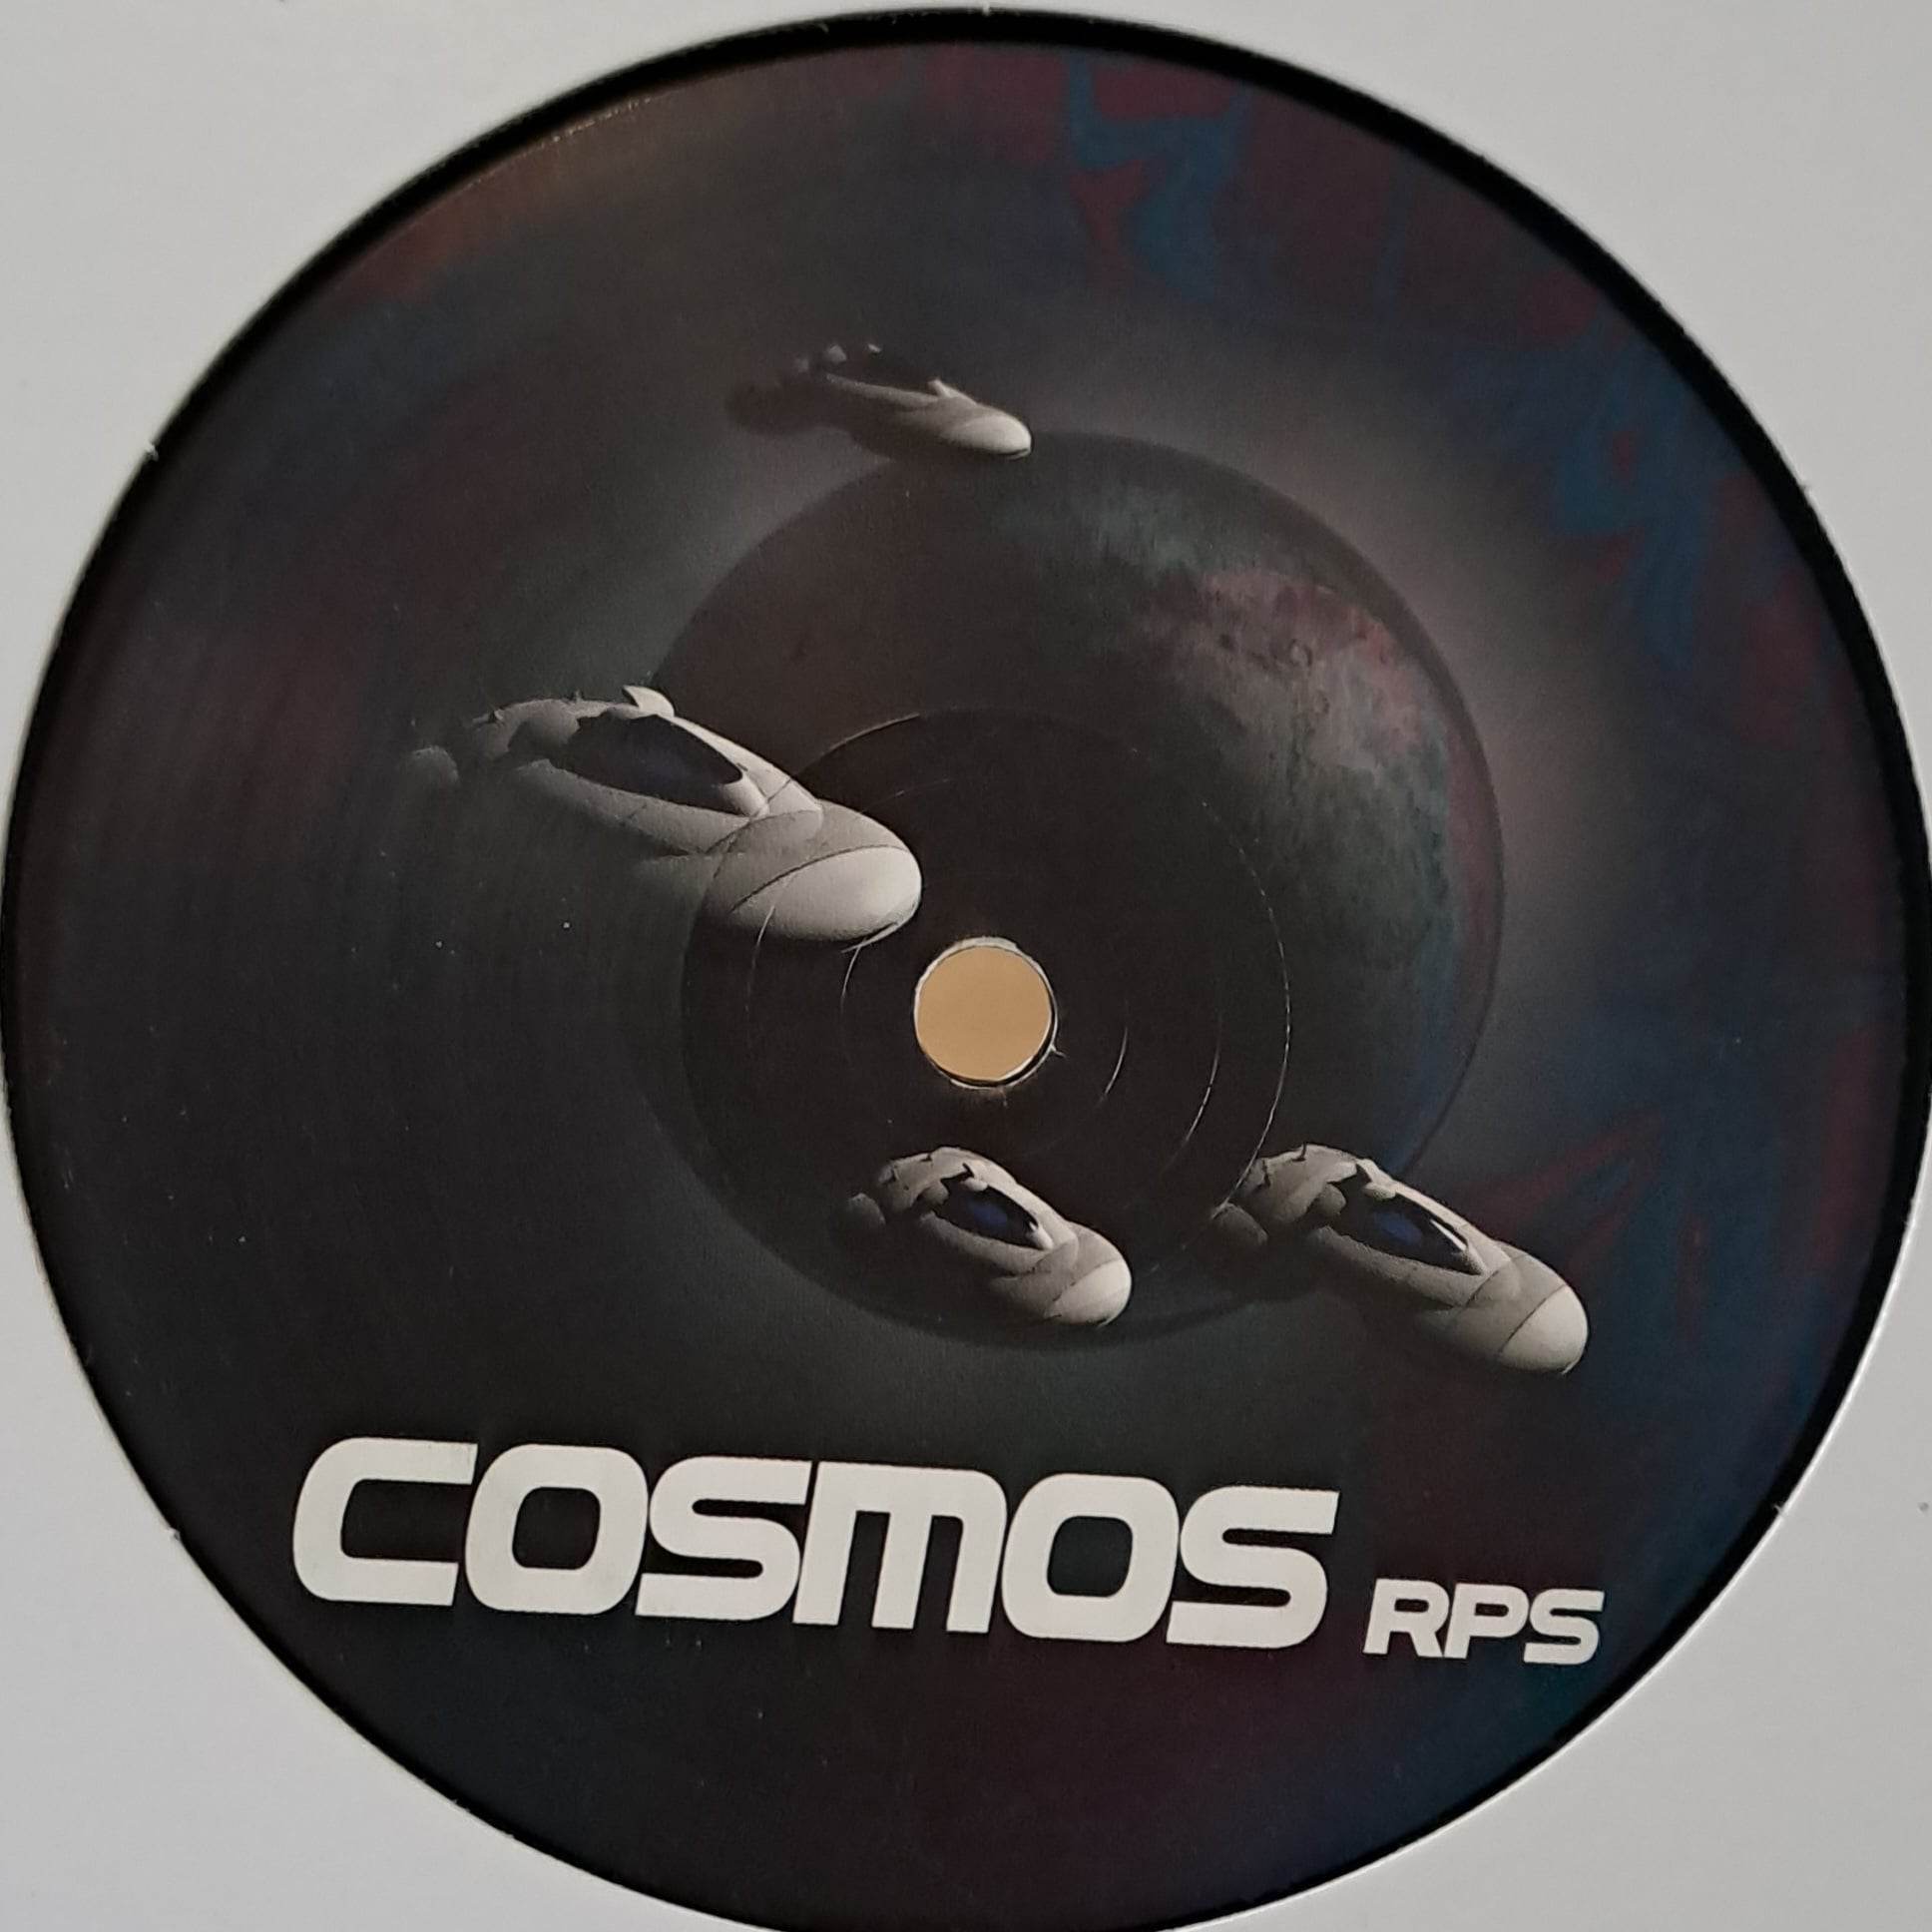 RPS Cosmos - vinyle freetekno